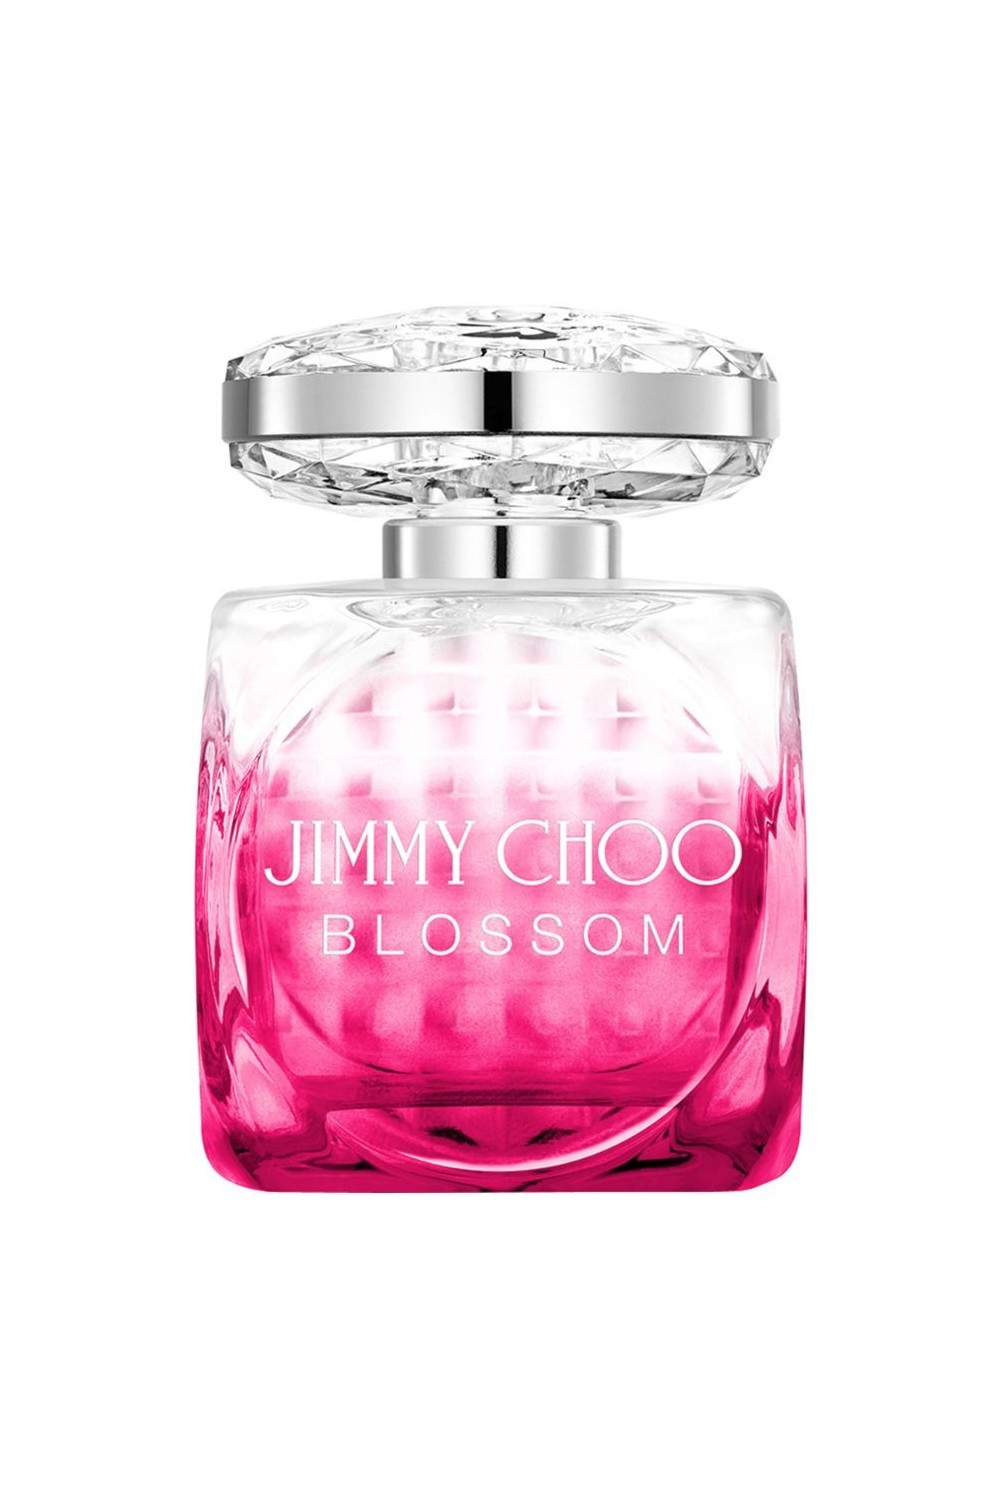 Jimmy Choo Blossom Eau De Perfume Spray 40ml